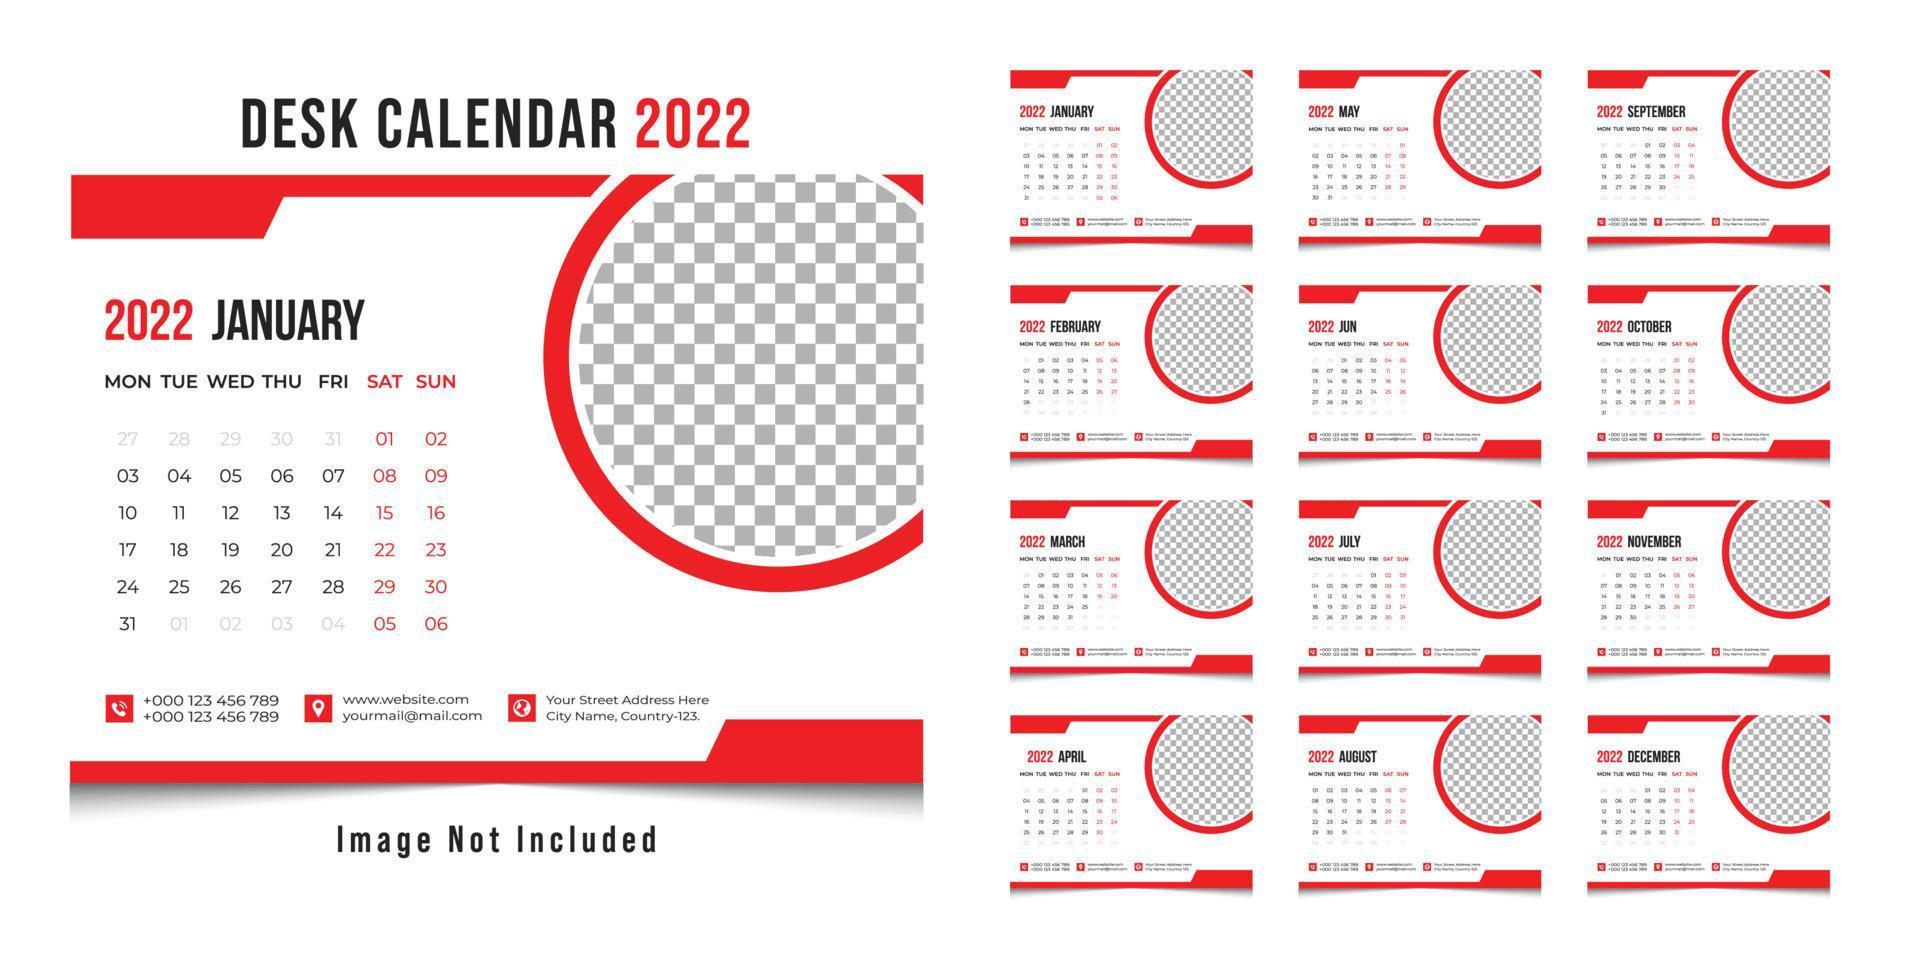 Calendar Design 2022 vector template. Happy new year 2022